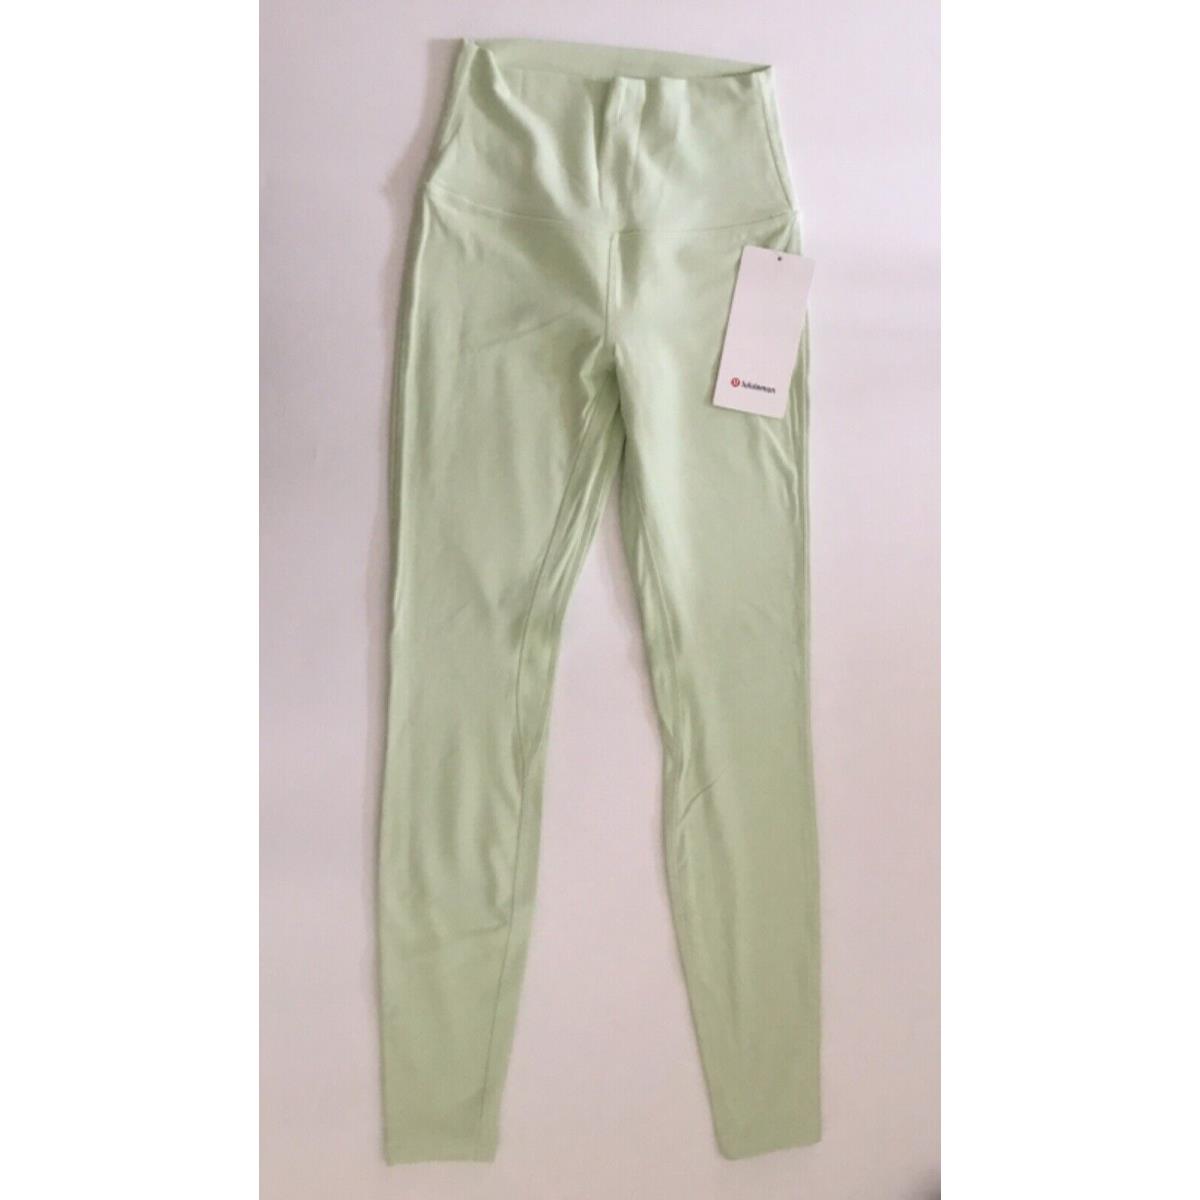 Lululemon Women s Align Pant 28 Length Nulu LW5CTIS Mint Green Size 12, -  Lululemon clothing - Green